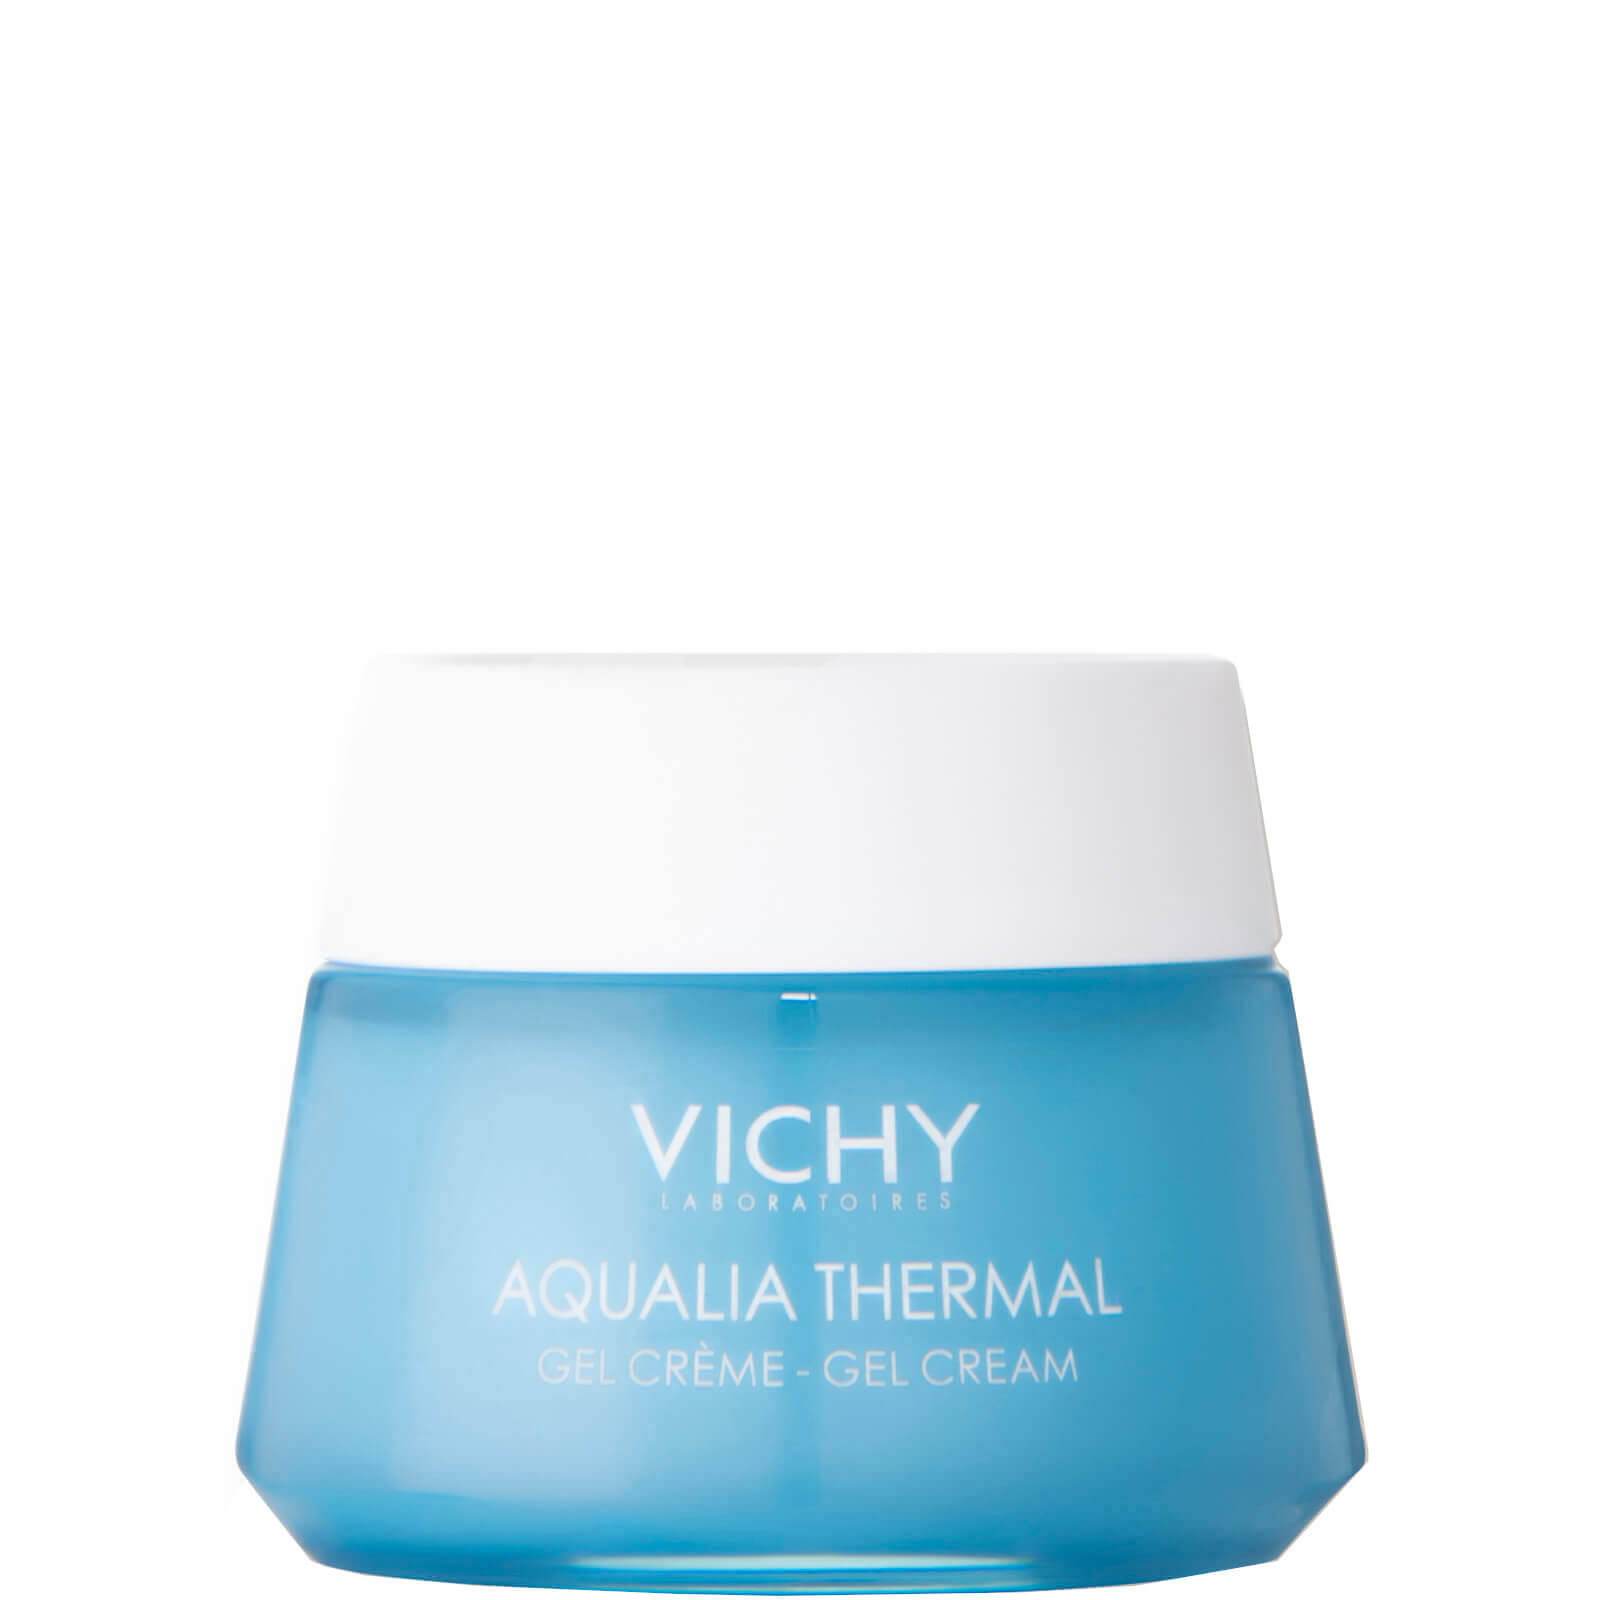 Vichy Water Gel, Rehydrating, Aqualia Thermal - 50 ml